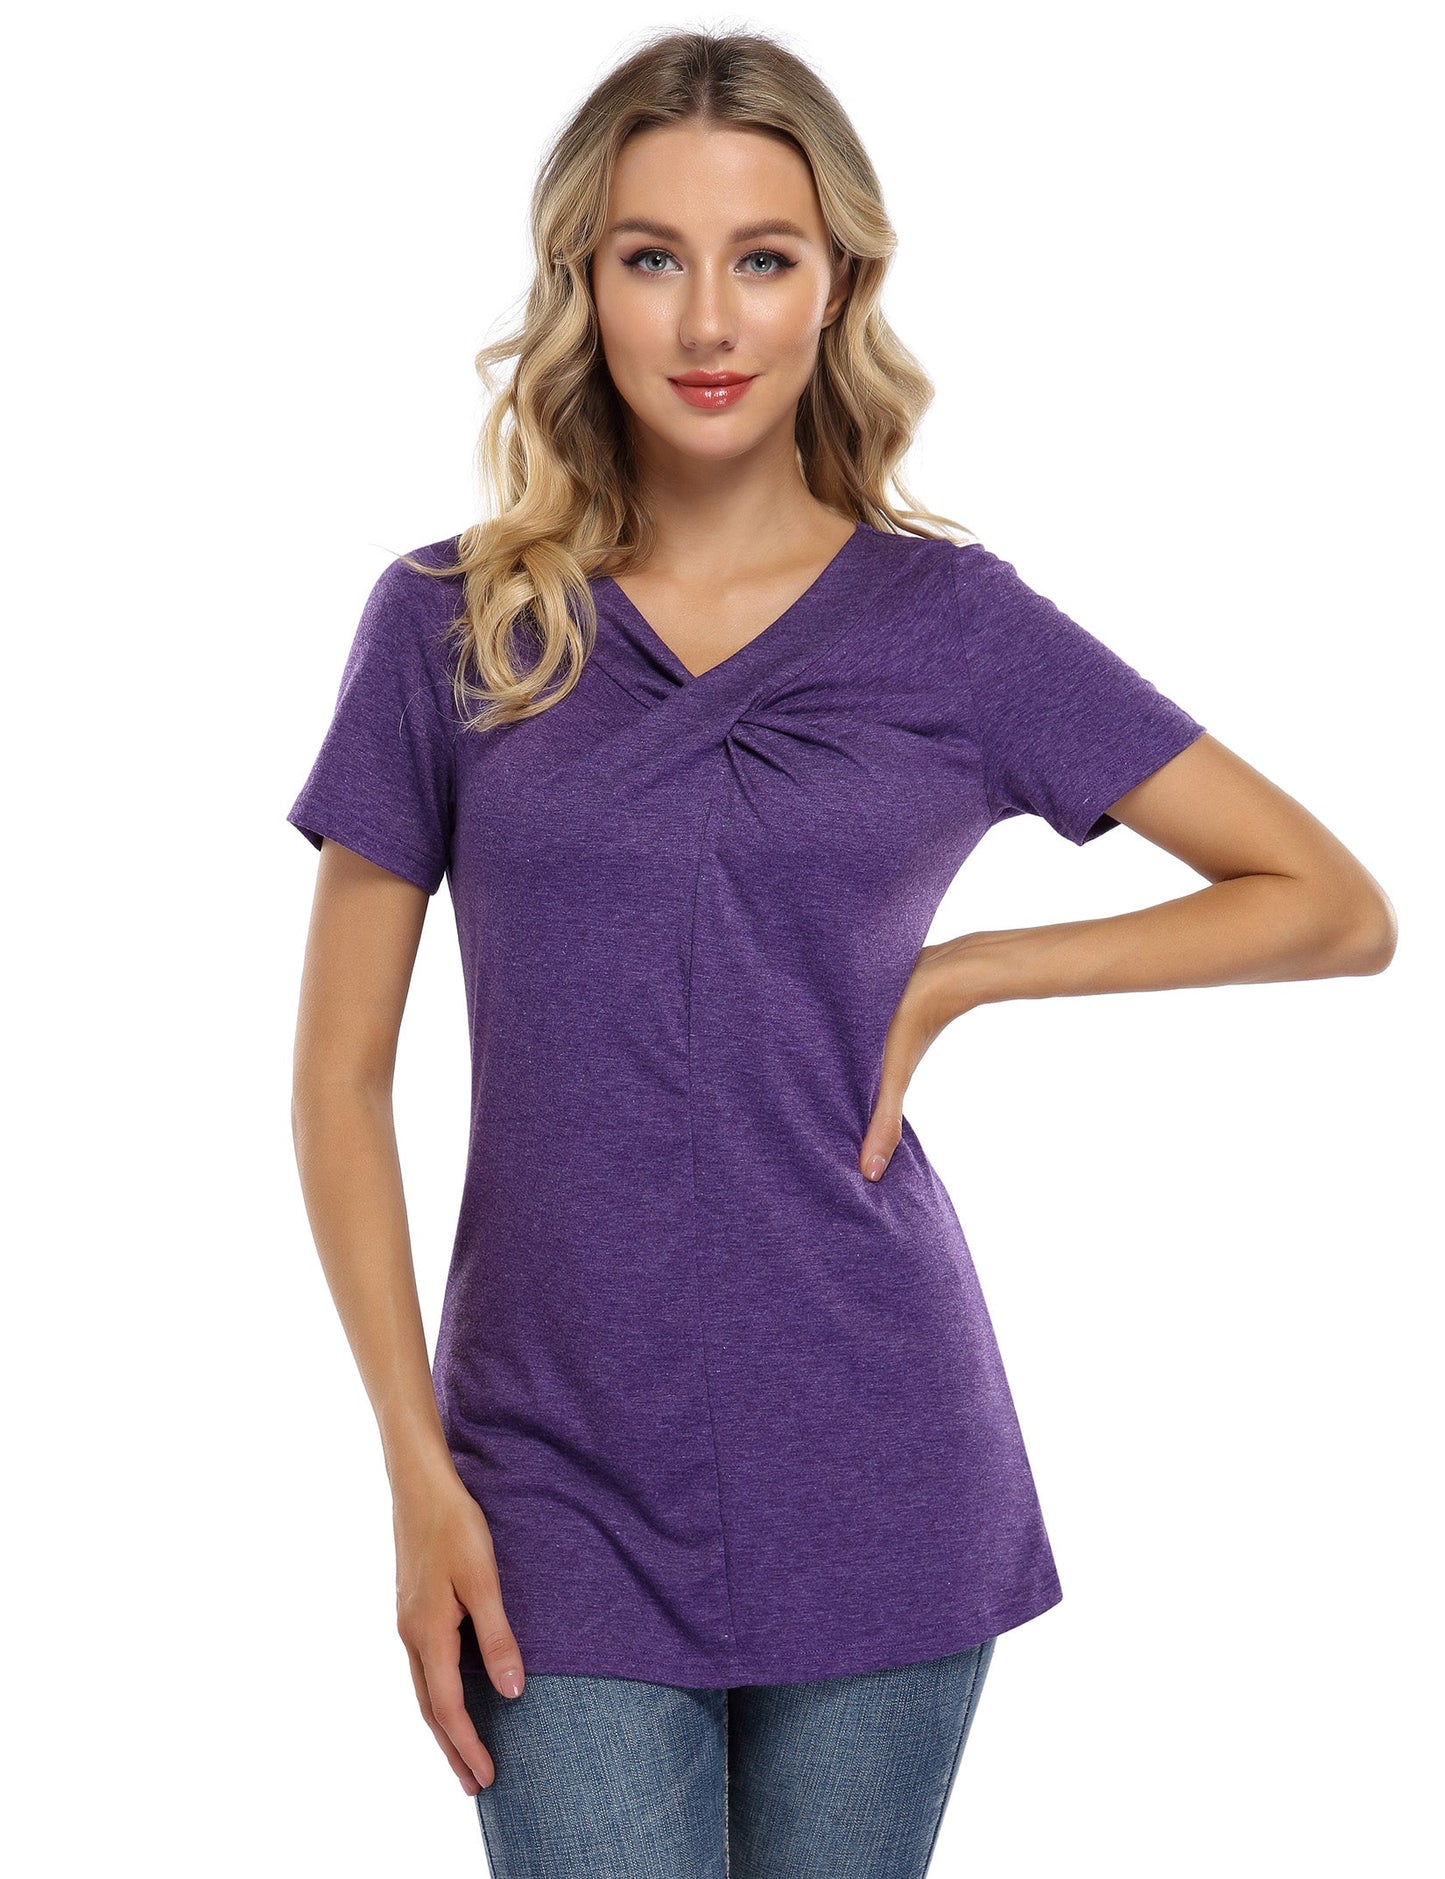 YESFASHION knot hem tops for women V Neck Blouse Purple